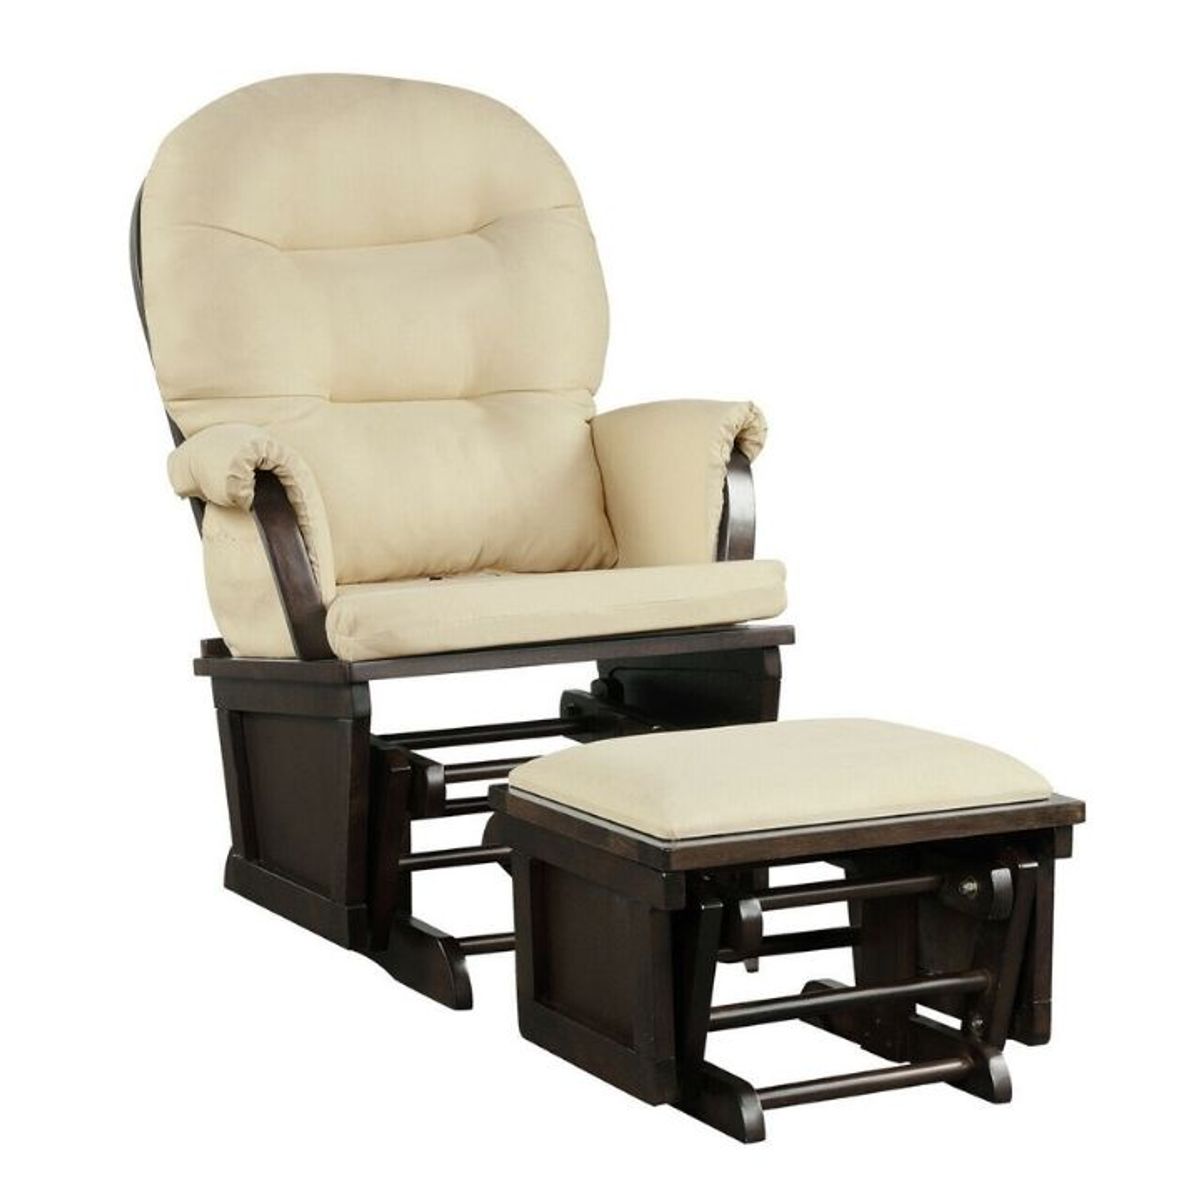 Photos - Rocking Chair Goplus Cushioned Rocking Glider Chair & Ottoman Set - Beige HW66397BE